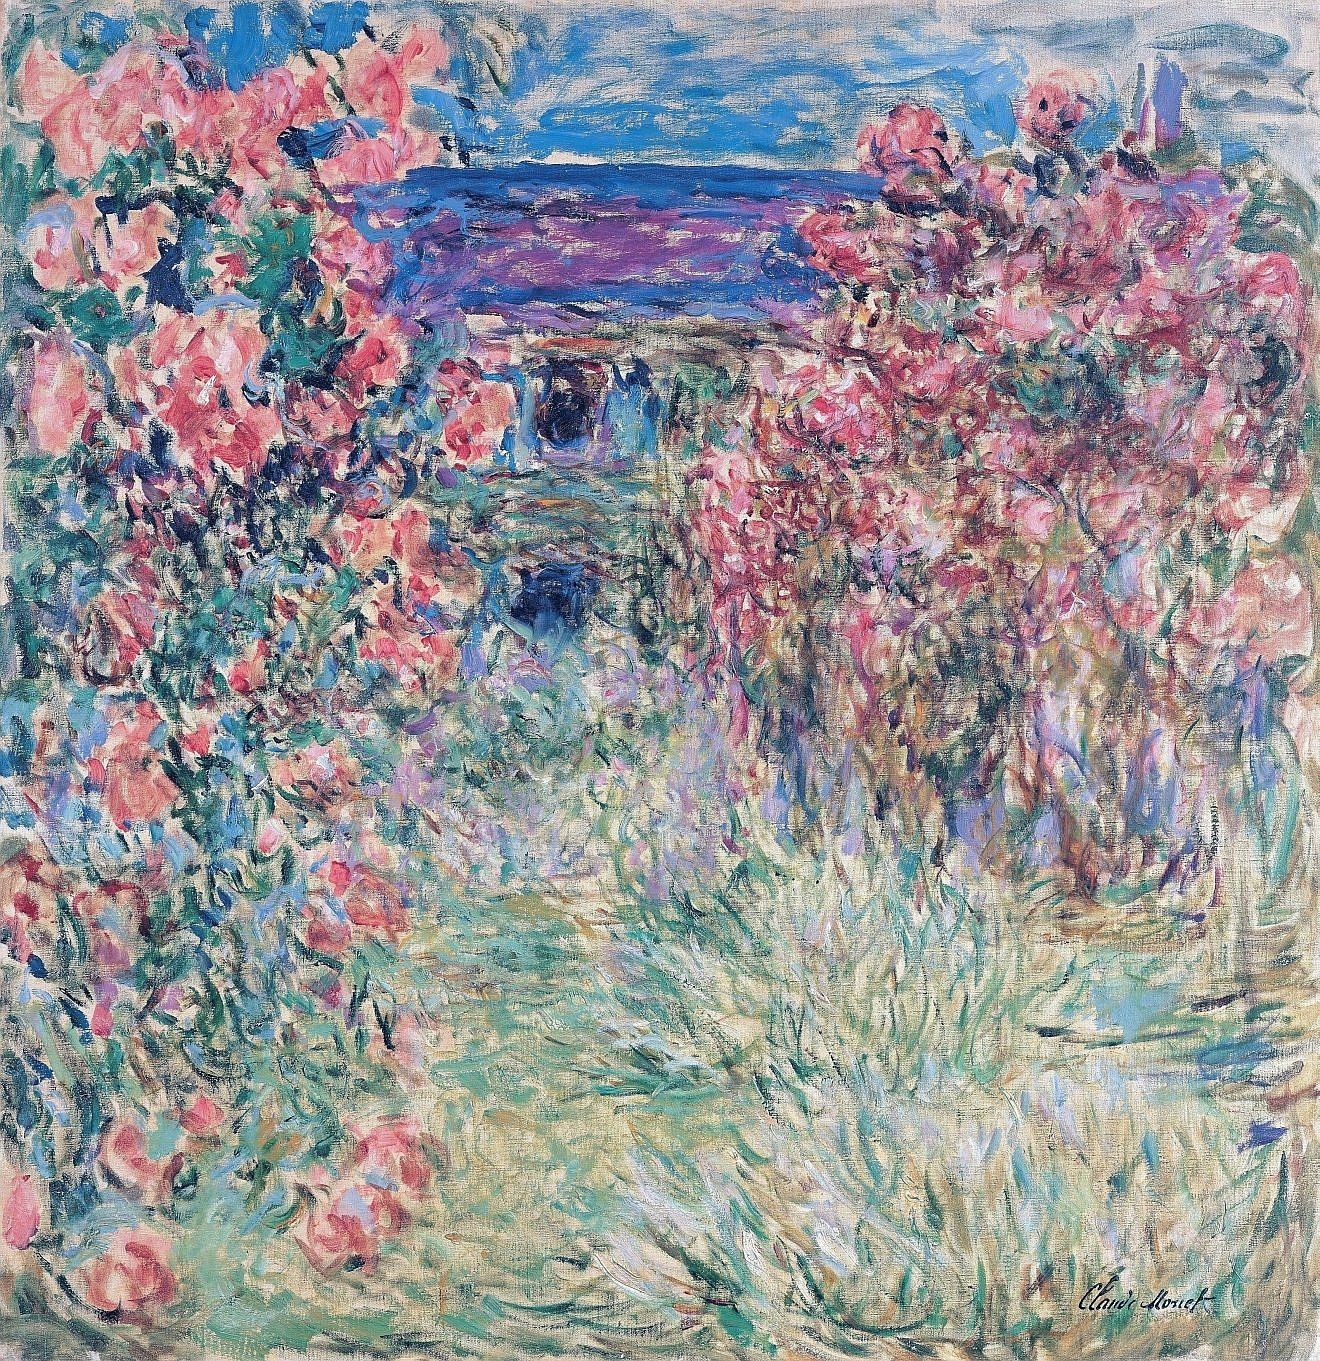 Claude+Monet-1840-1926 (362).jpg